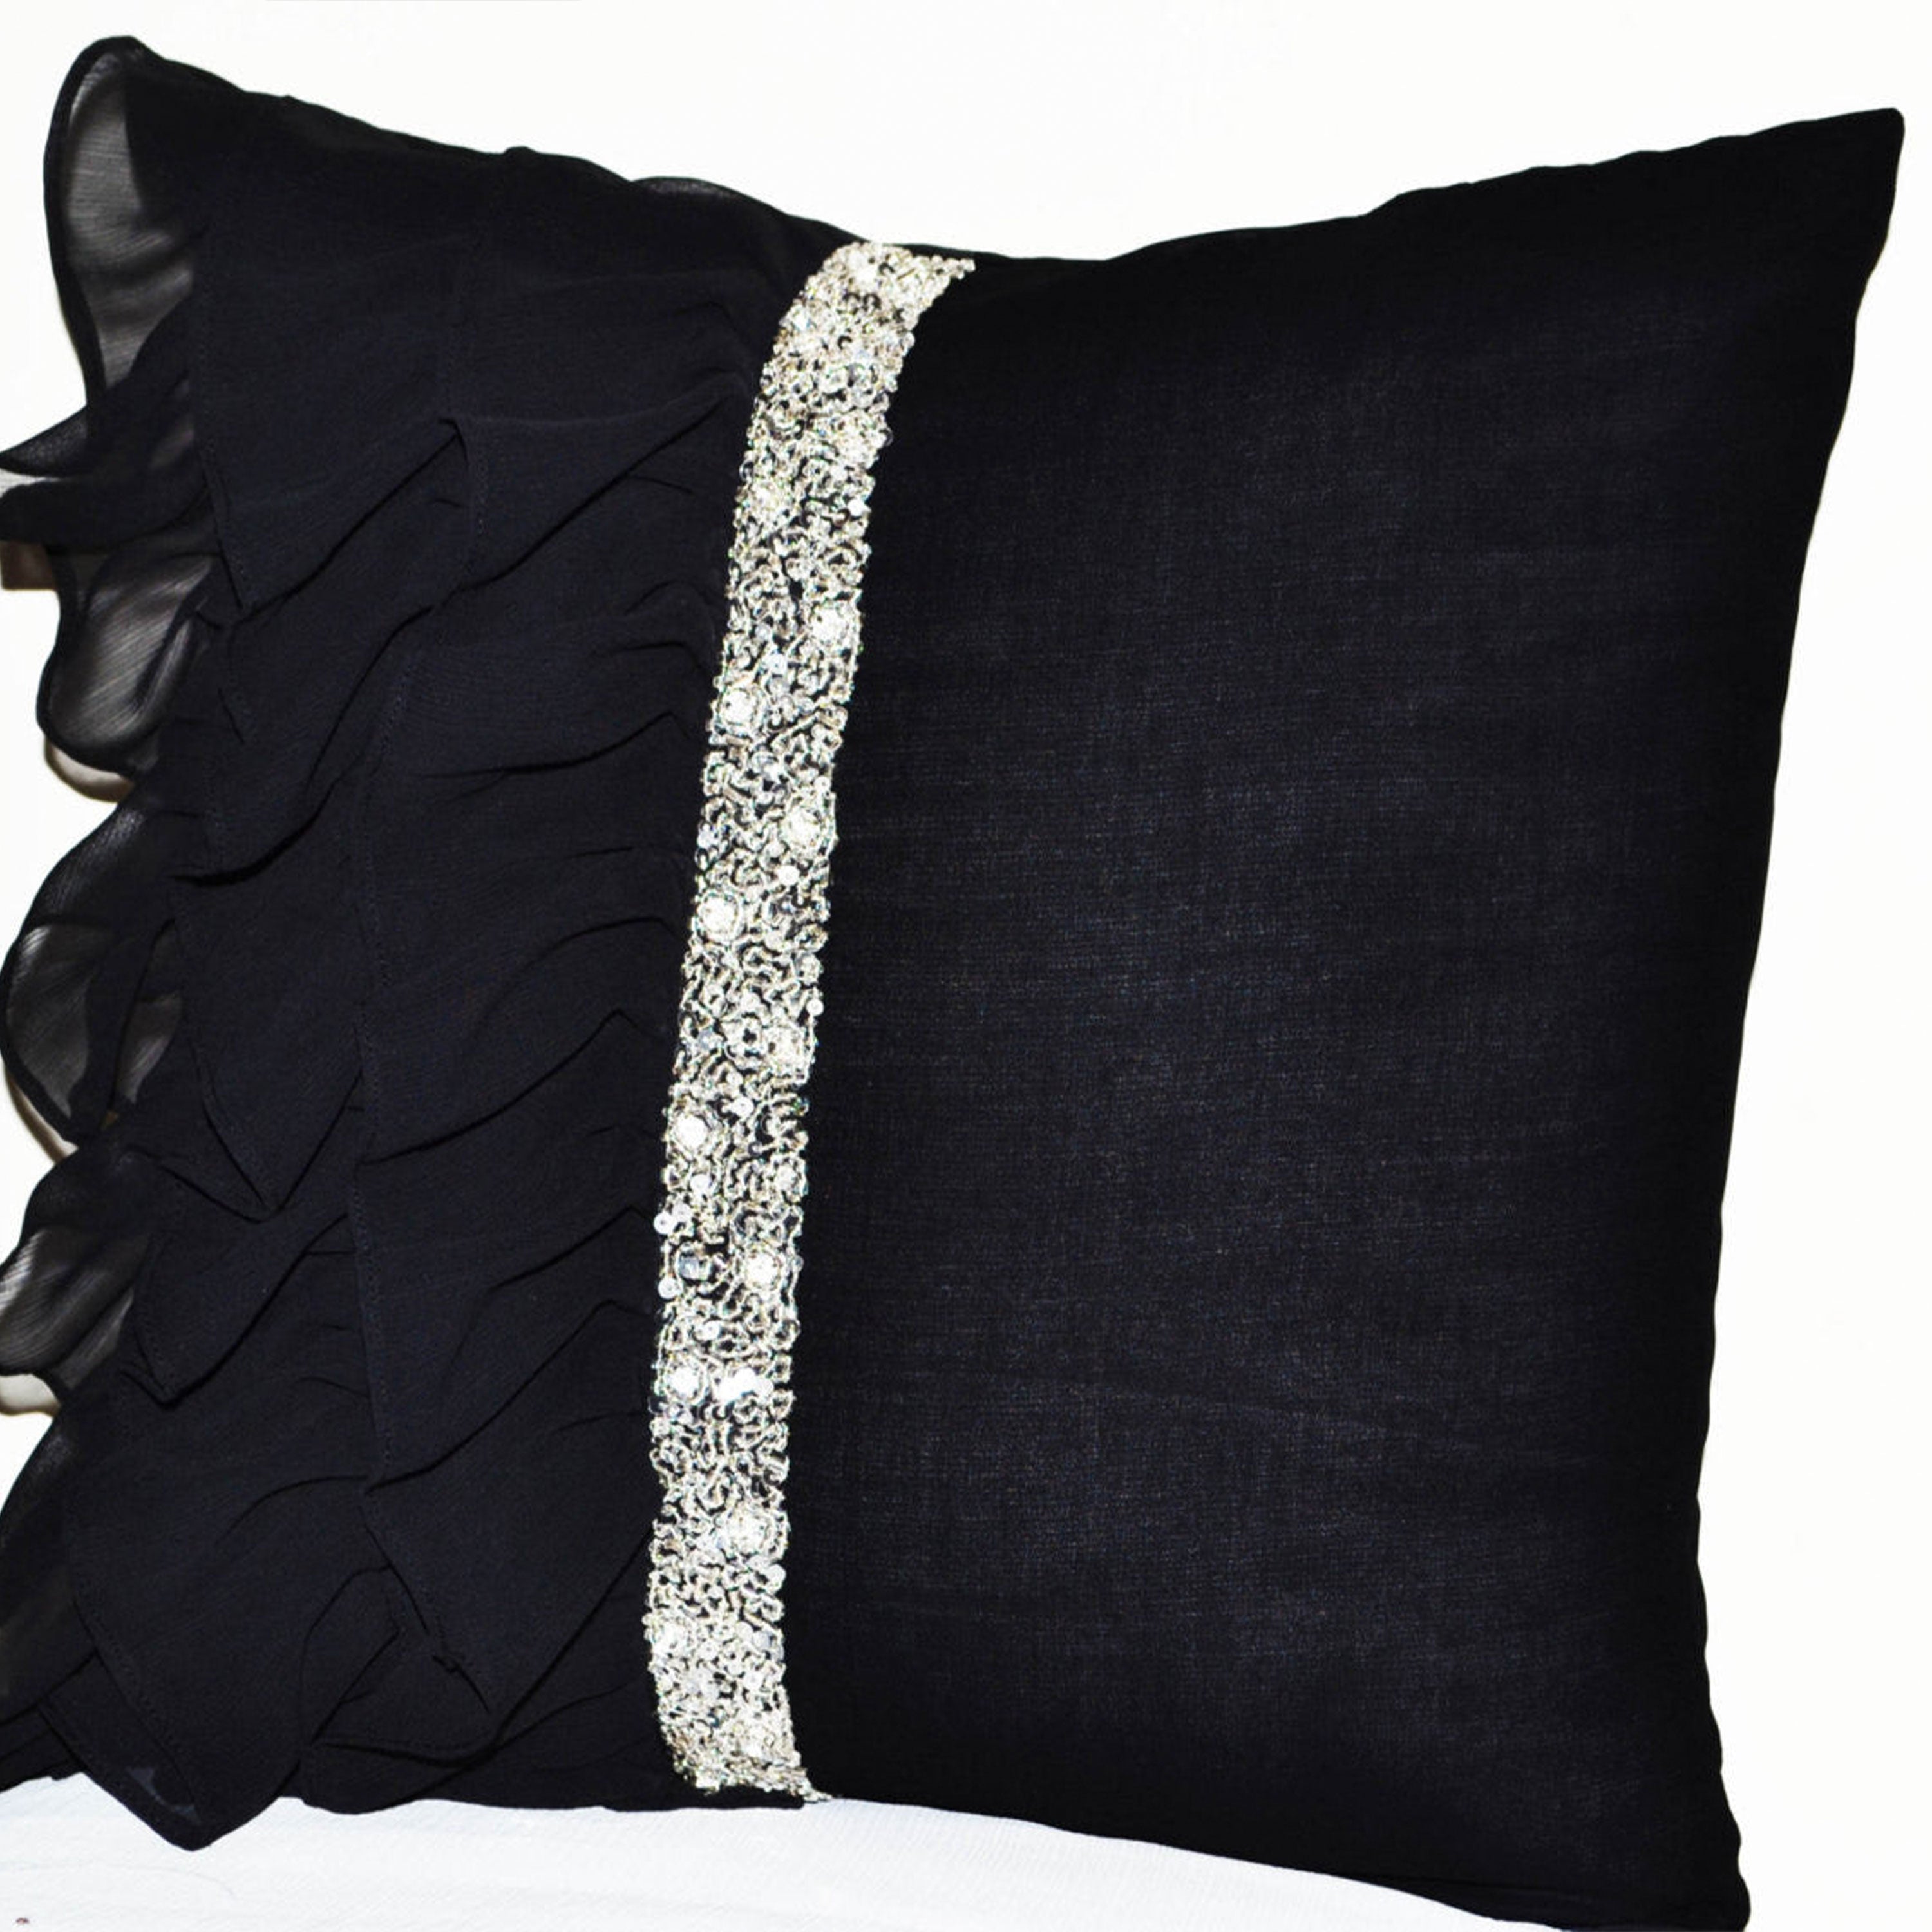 Elegant Black ruffled sequin throw pillow - 16X16  Decorative Pillow - Black cushion cover - Gift Pillow